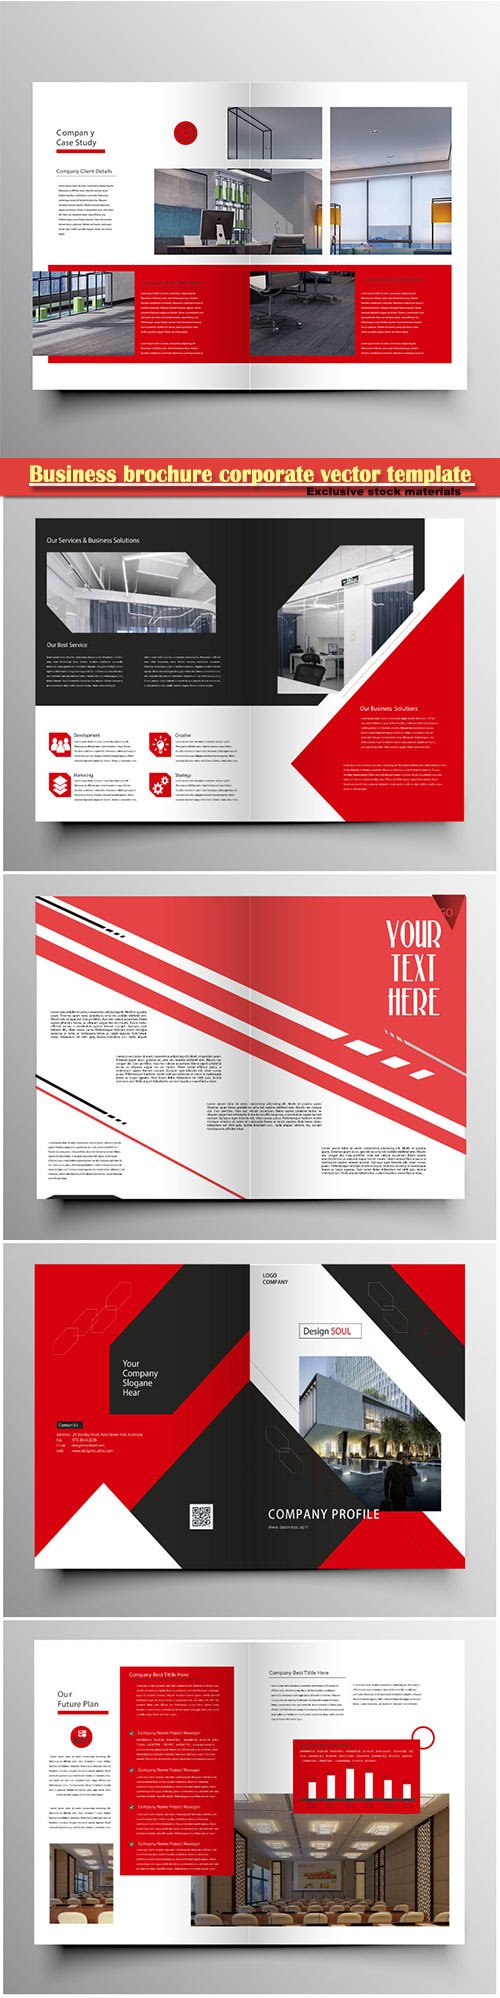 Business brochure corporate vector template # 42